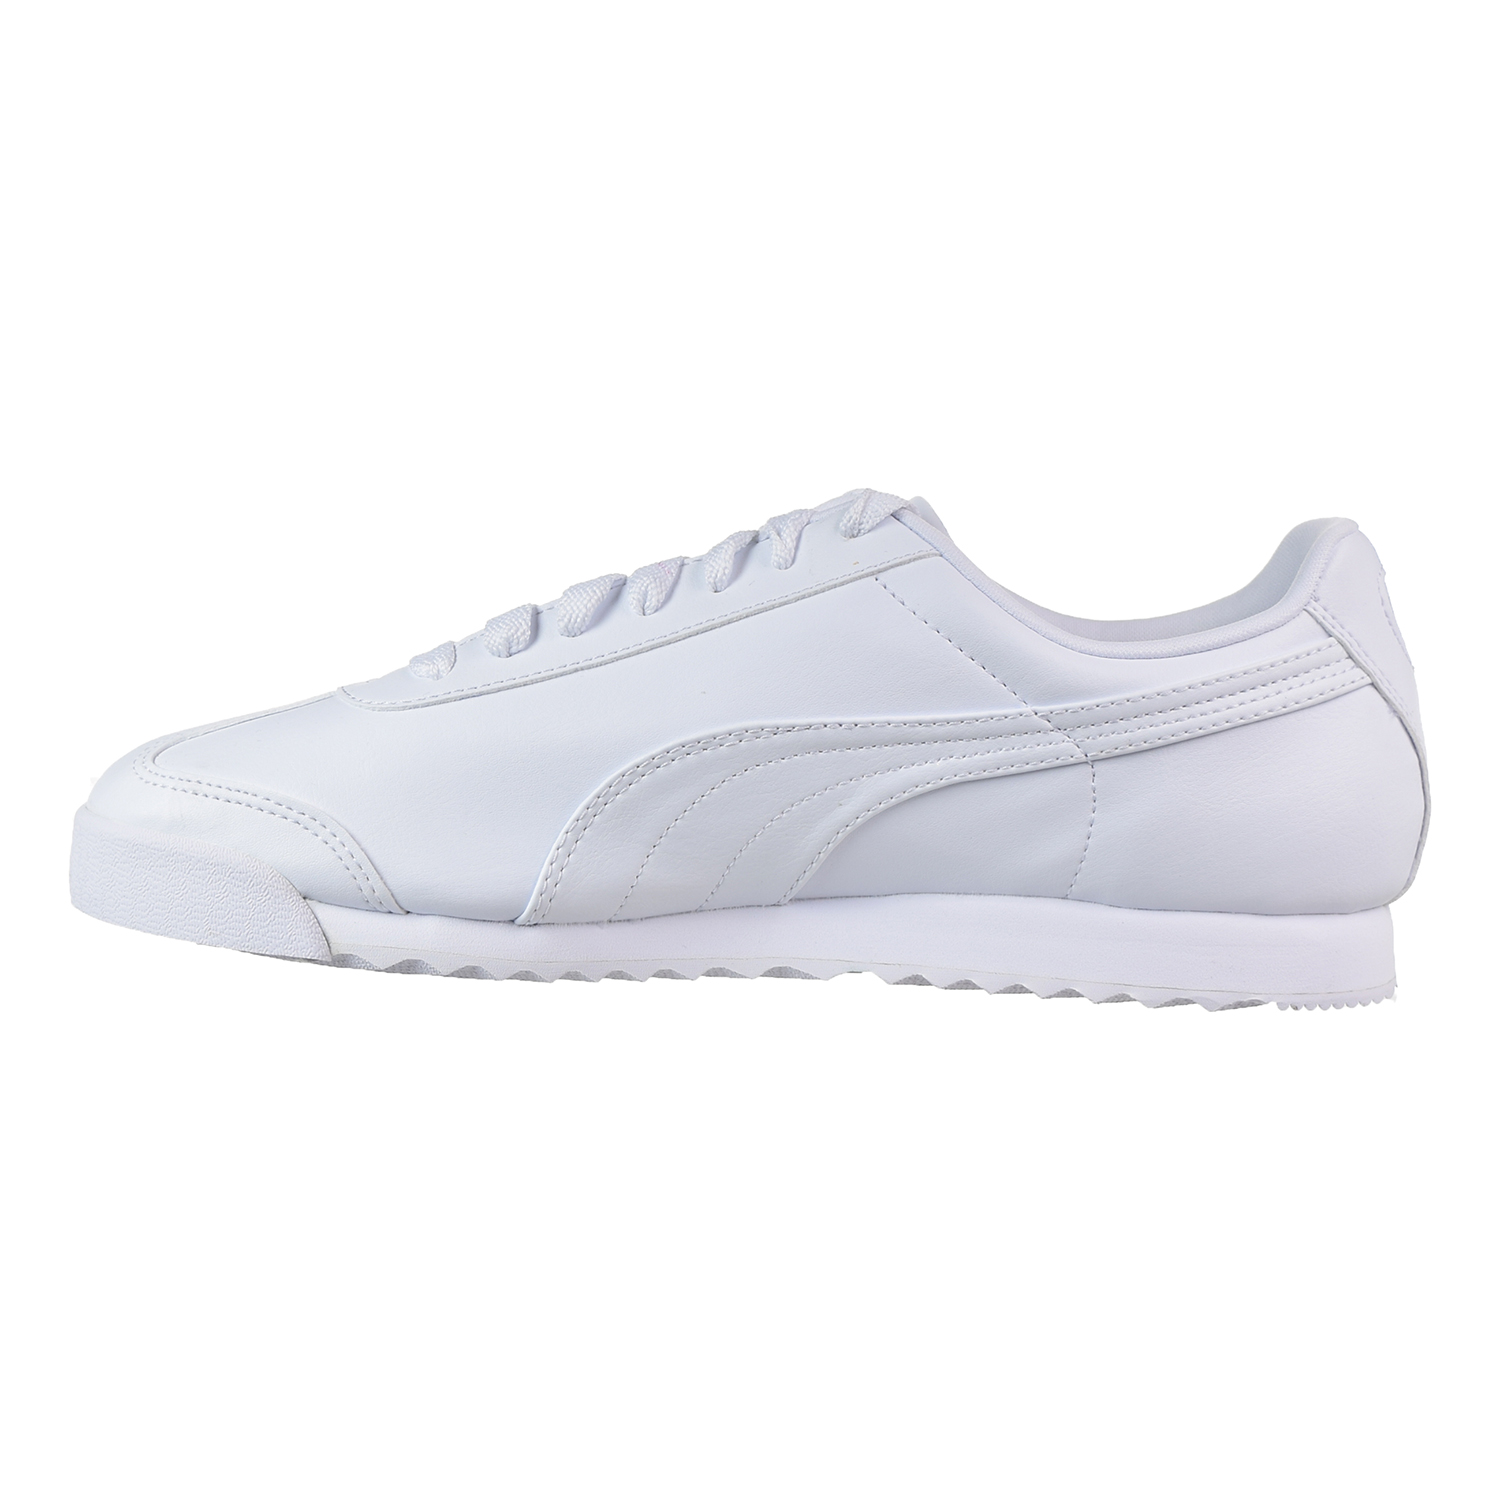 Puma Roma Basic Men's Shoes Puma White-Light Grey 353572-21 | eBay